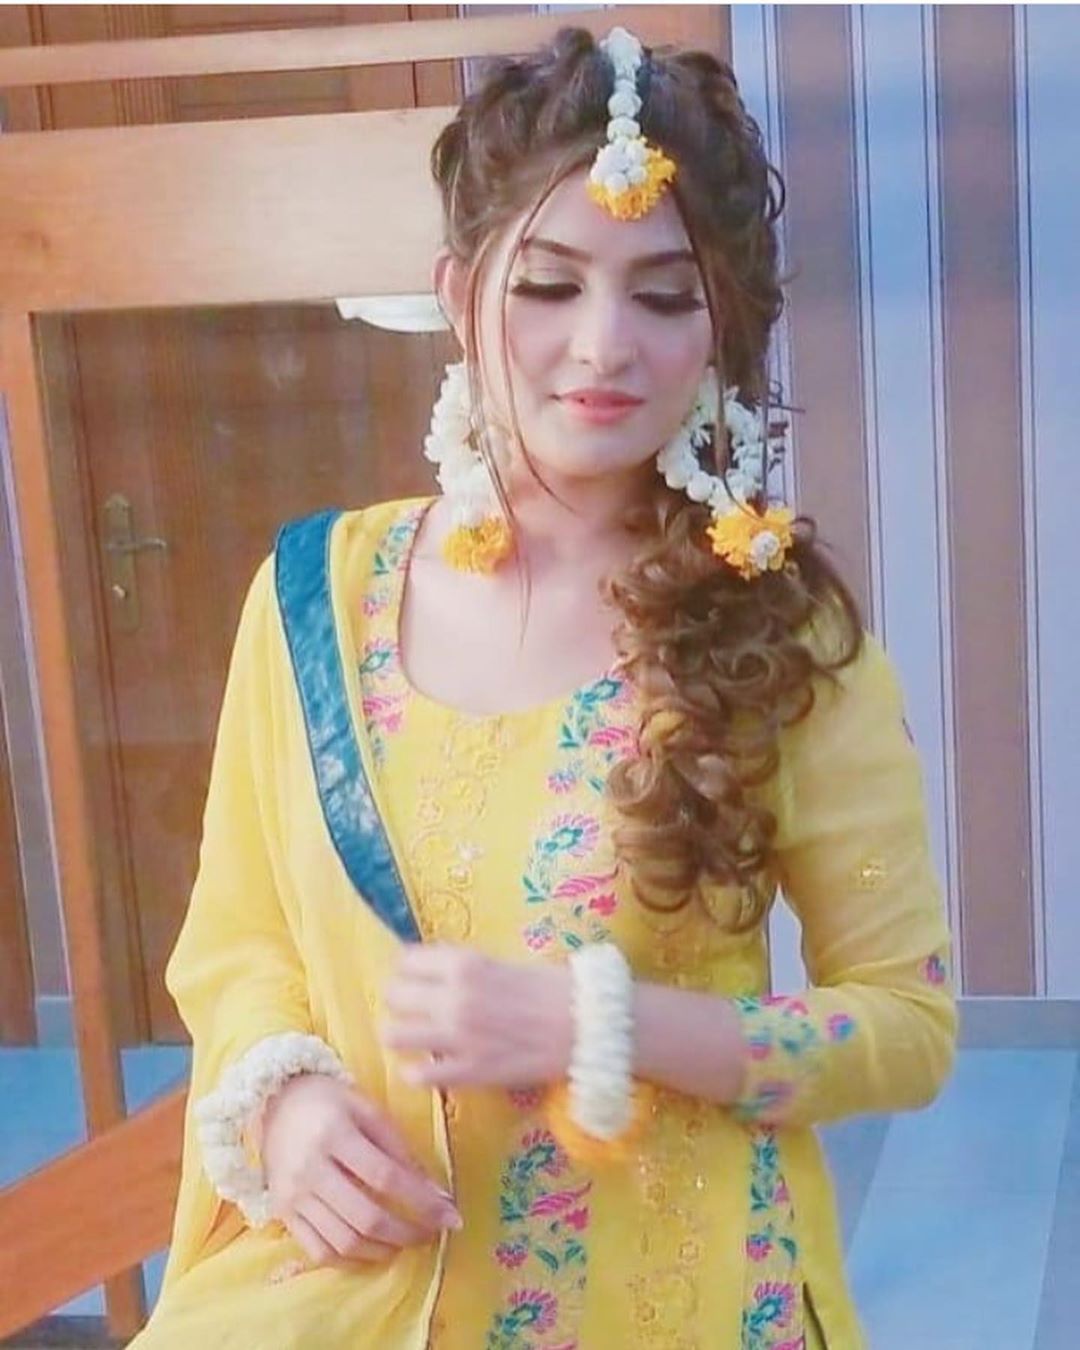 Awesome Wedding Clicks of Geo News Anchor Hifza Chaudhry